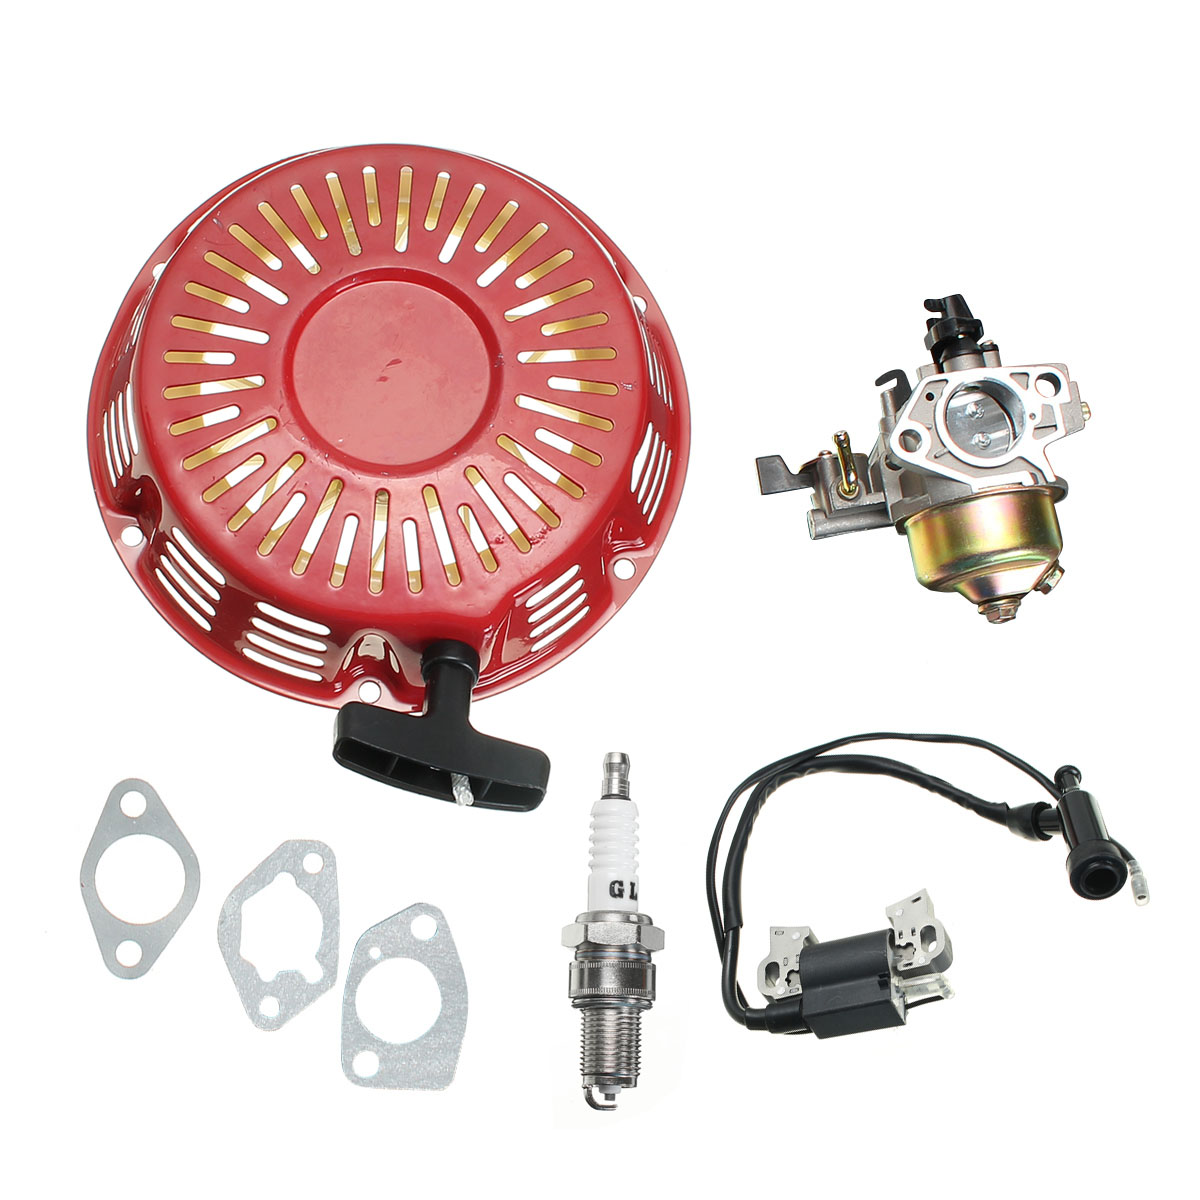 

Carburetor & Pull Starter Recoil & Ignition Coil For Honda GX340 11HP GX390 13HP